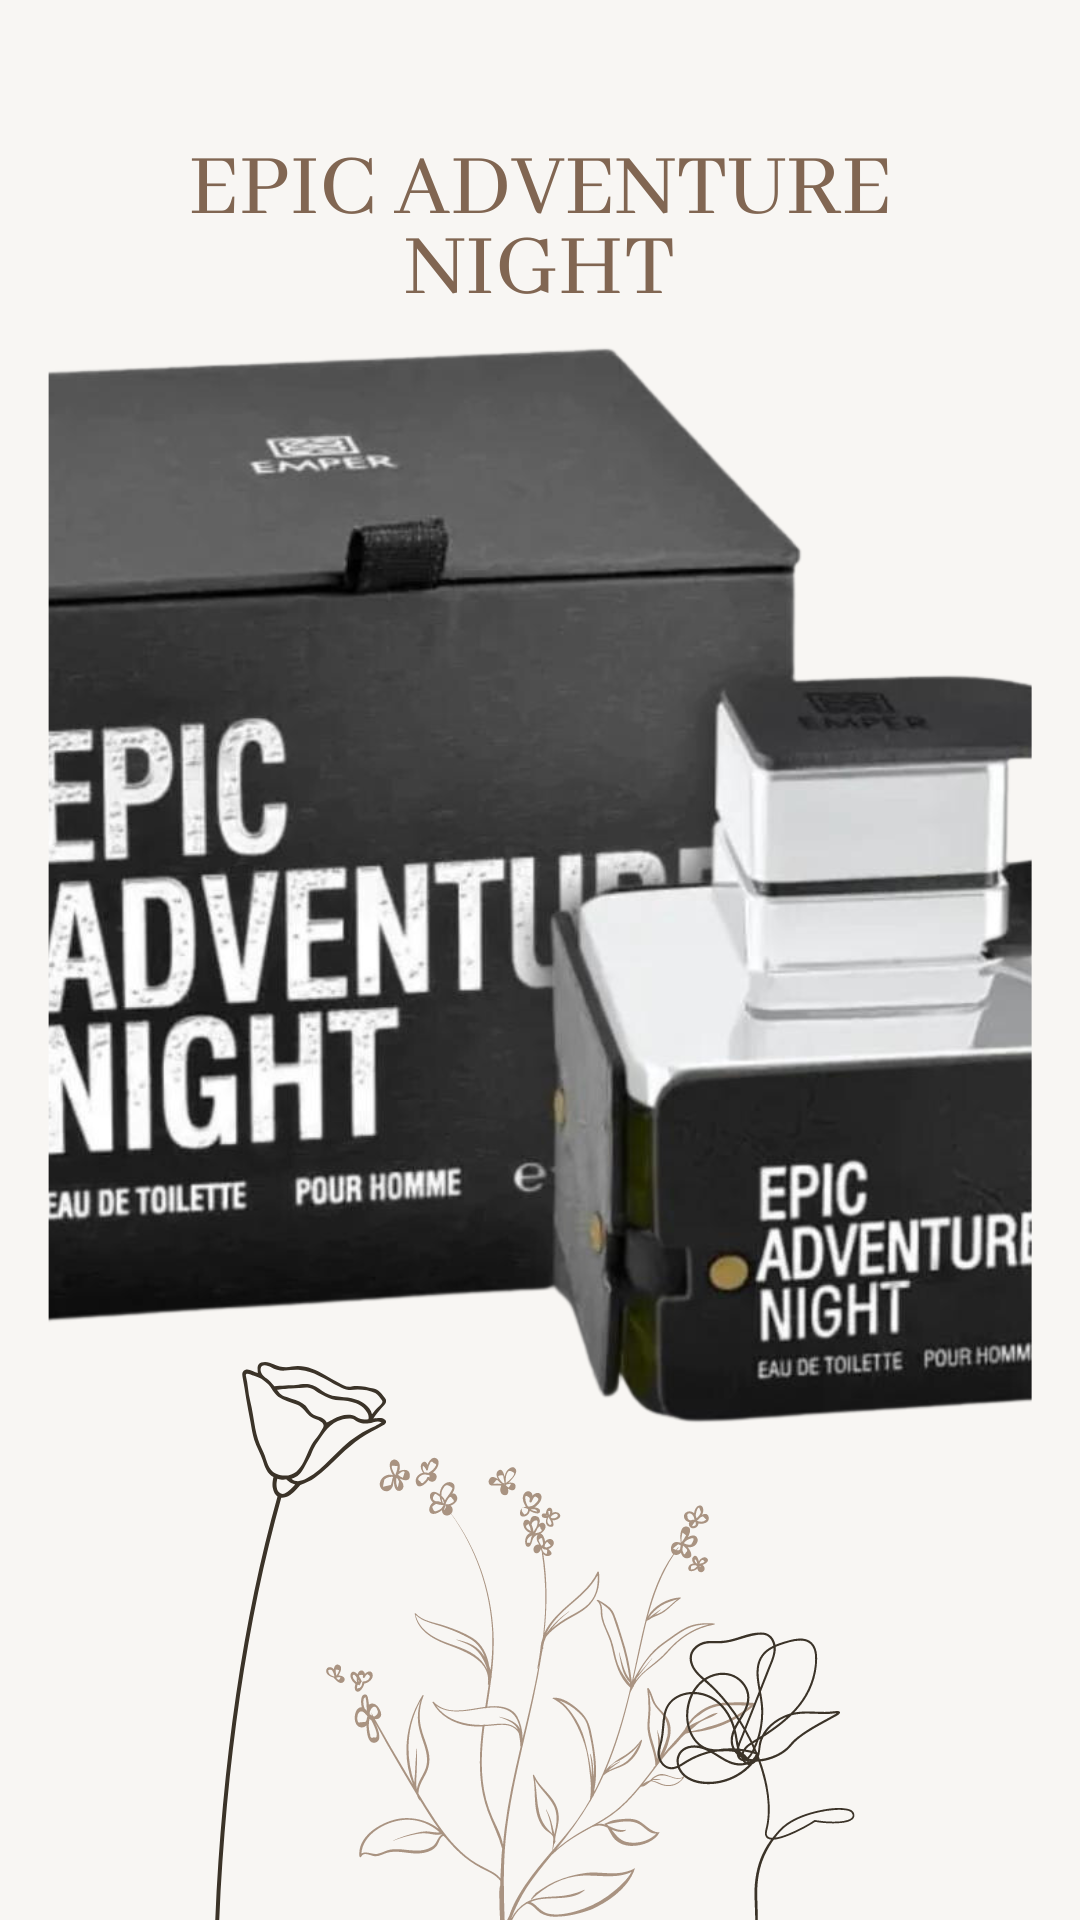 EPIC ADVENTURE NIGHT BY EMPER